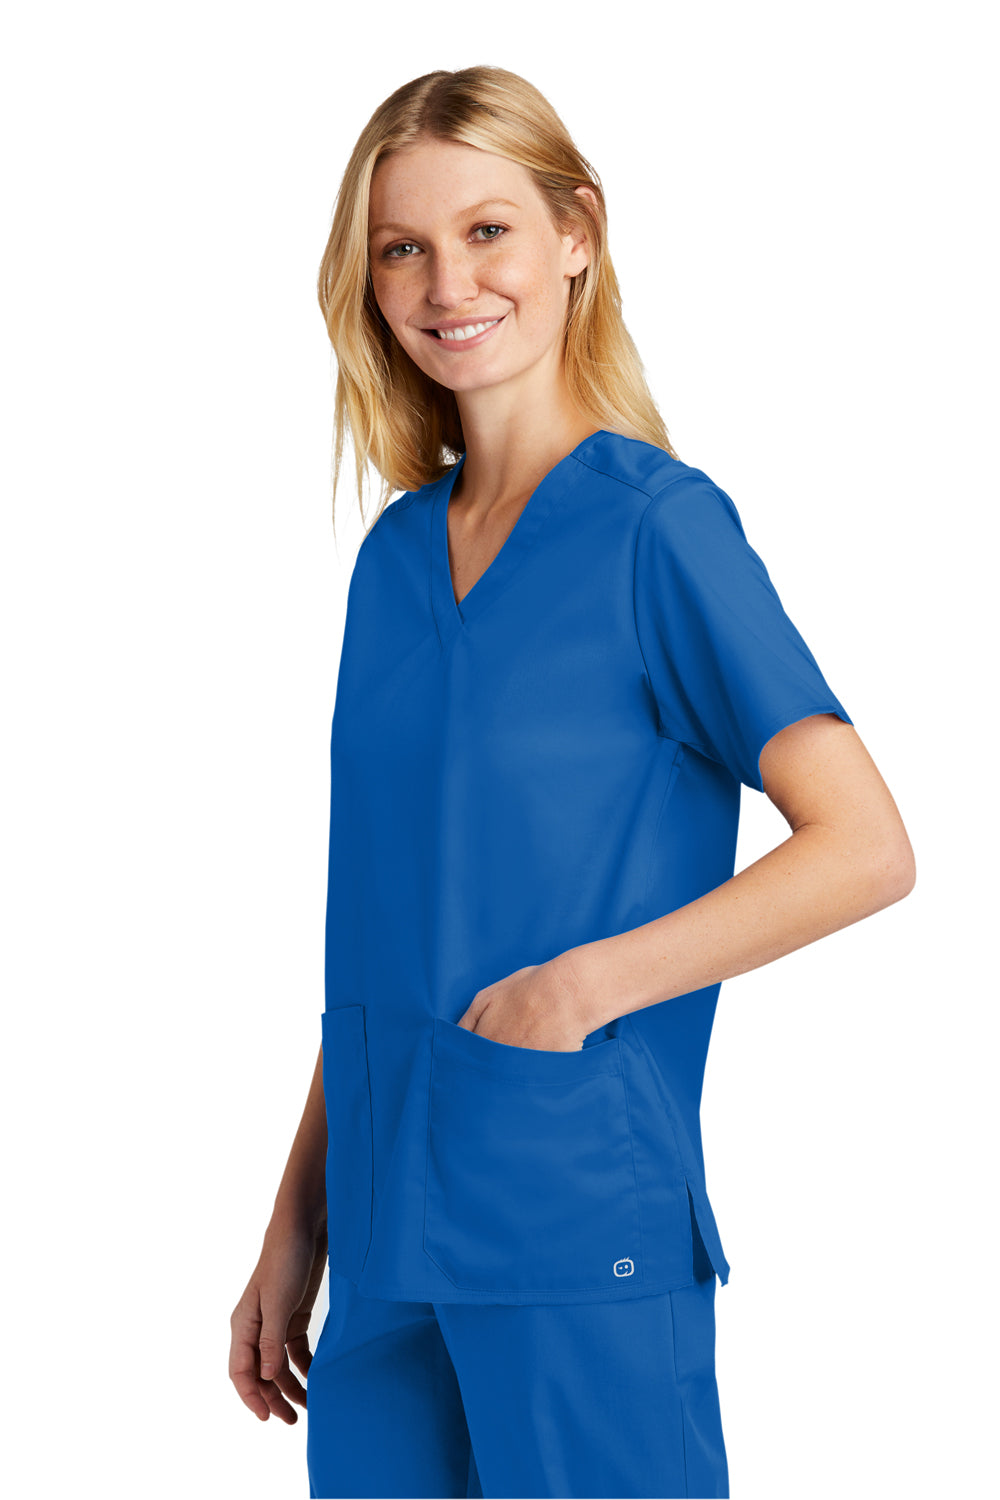 Wonderwink WW4560 WorkFlex Short Sleeve V-Neck Shirt Royal Blue 3Q